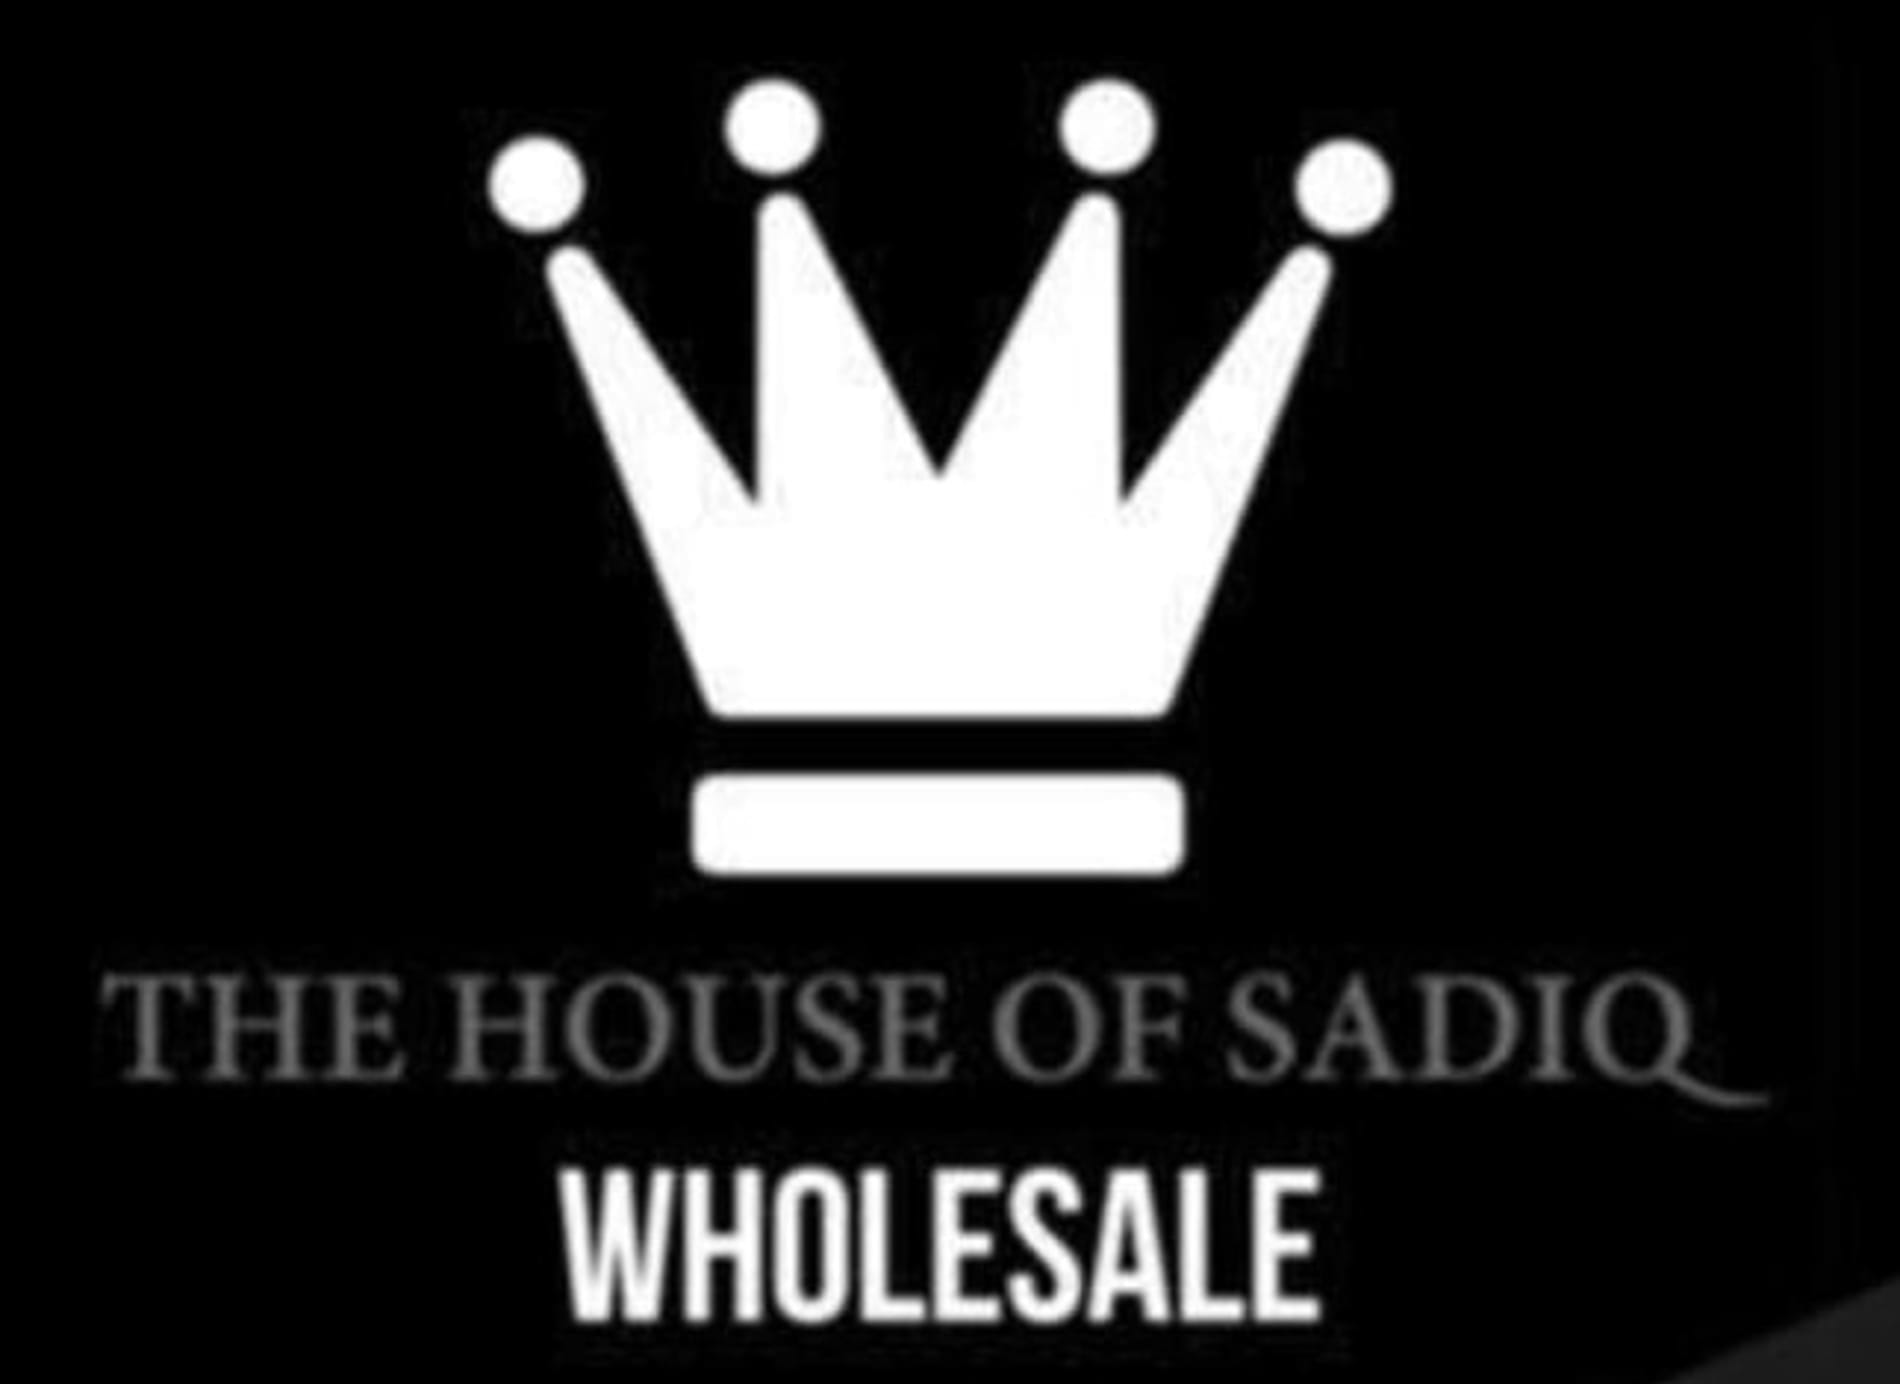 The House of Sadiq